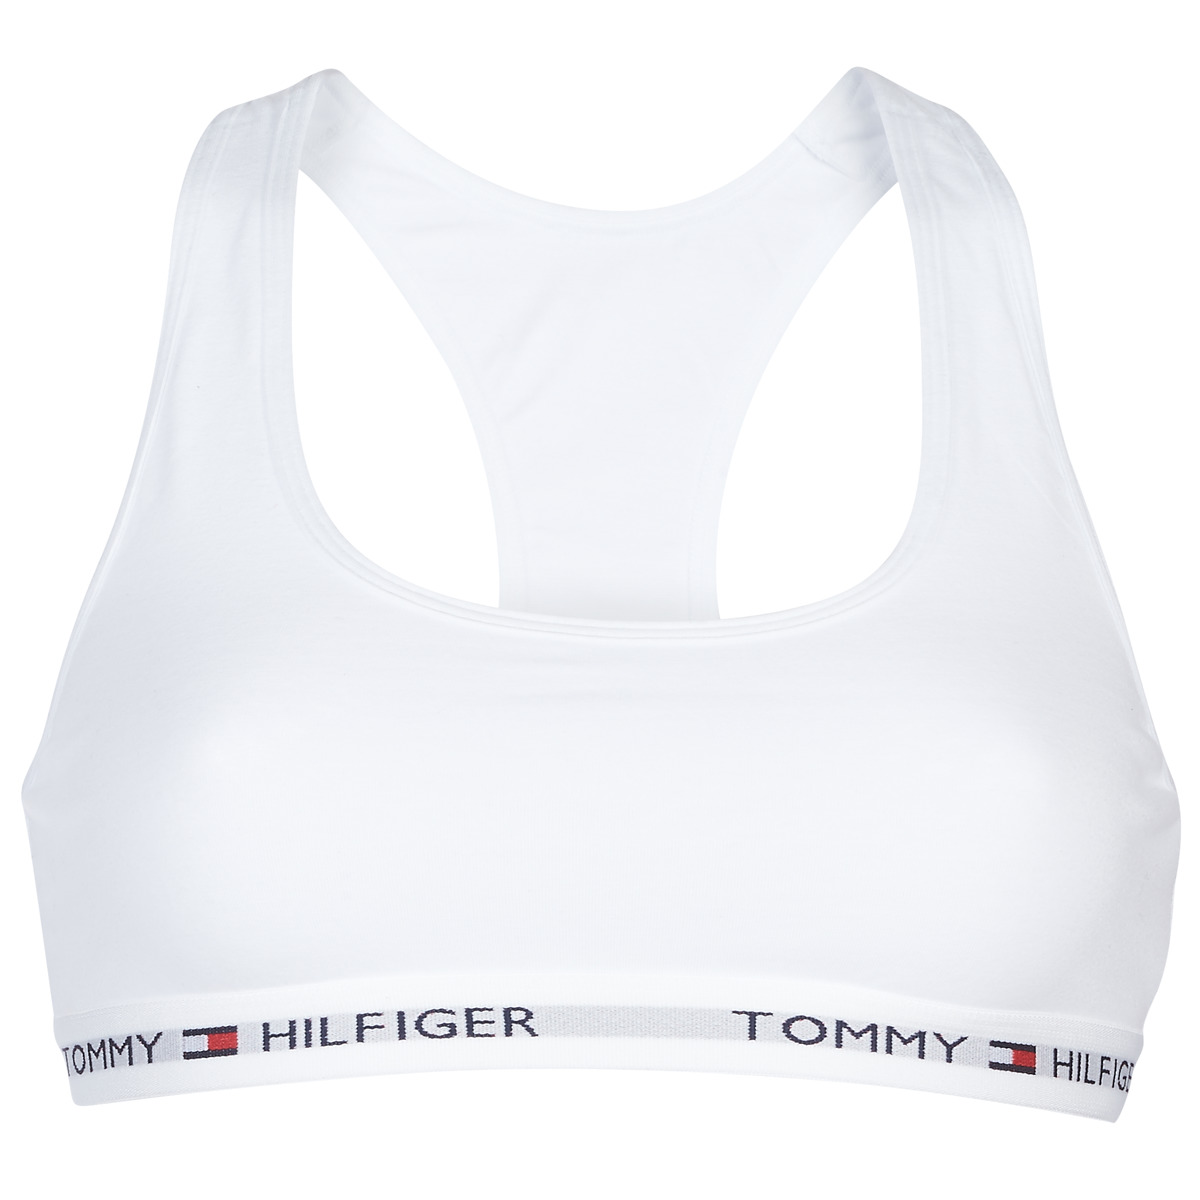 Tommy Hilfiger Underwear - Unlined Bralette Bra